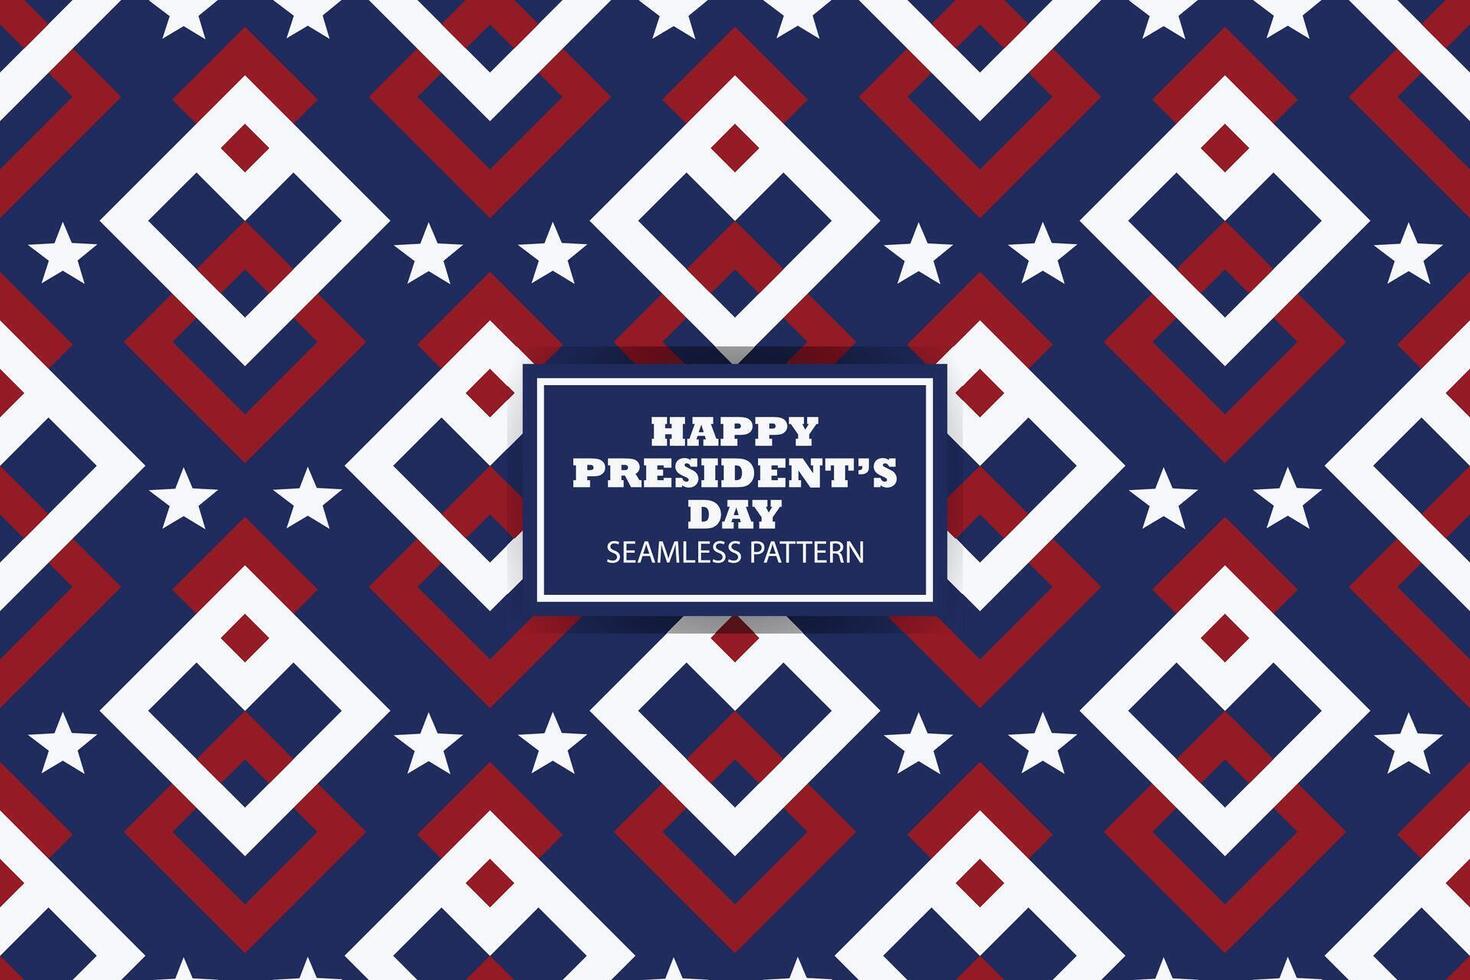 Presidents Day Background Design. Banner, Poster, Greeting Card. Vector Illustration.